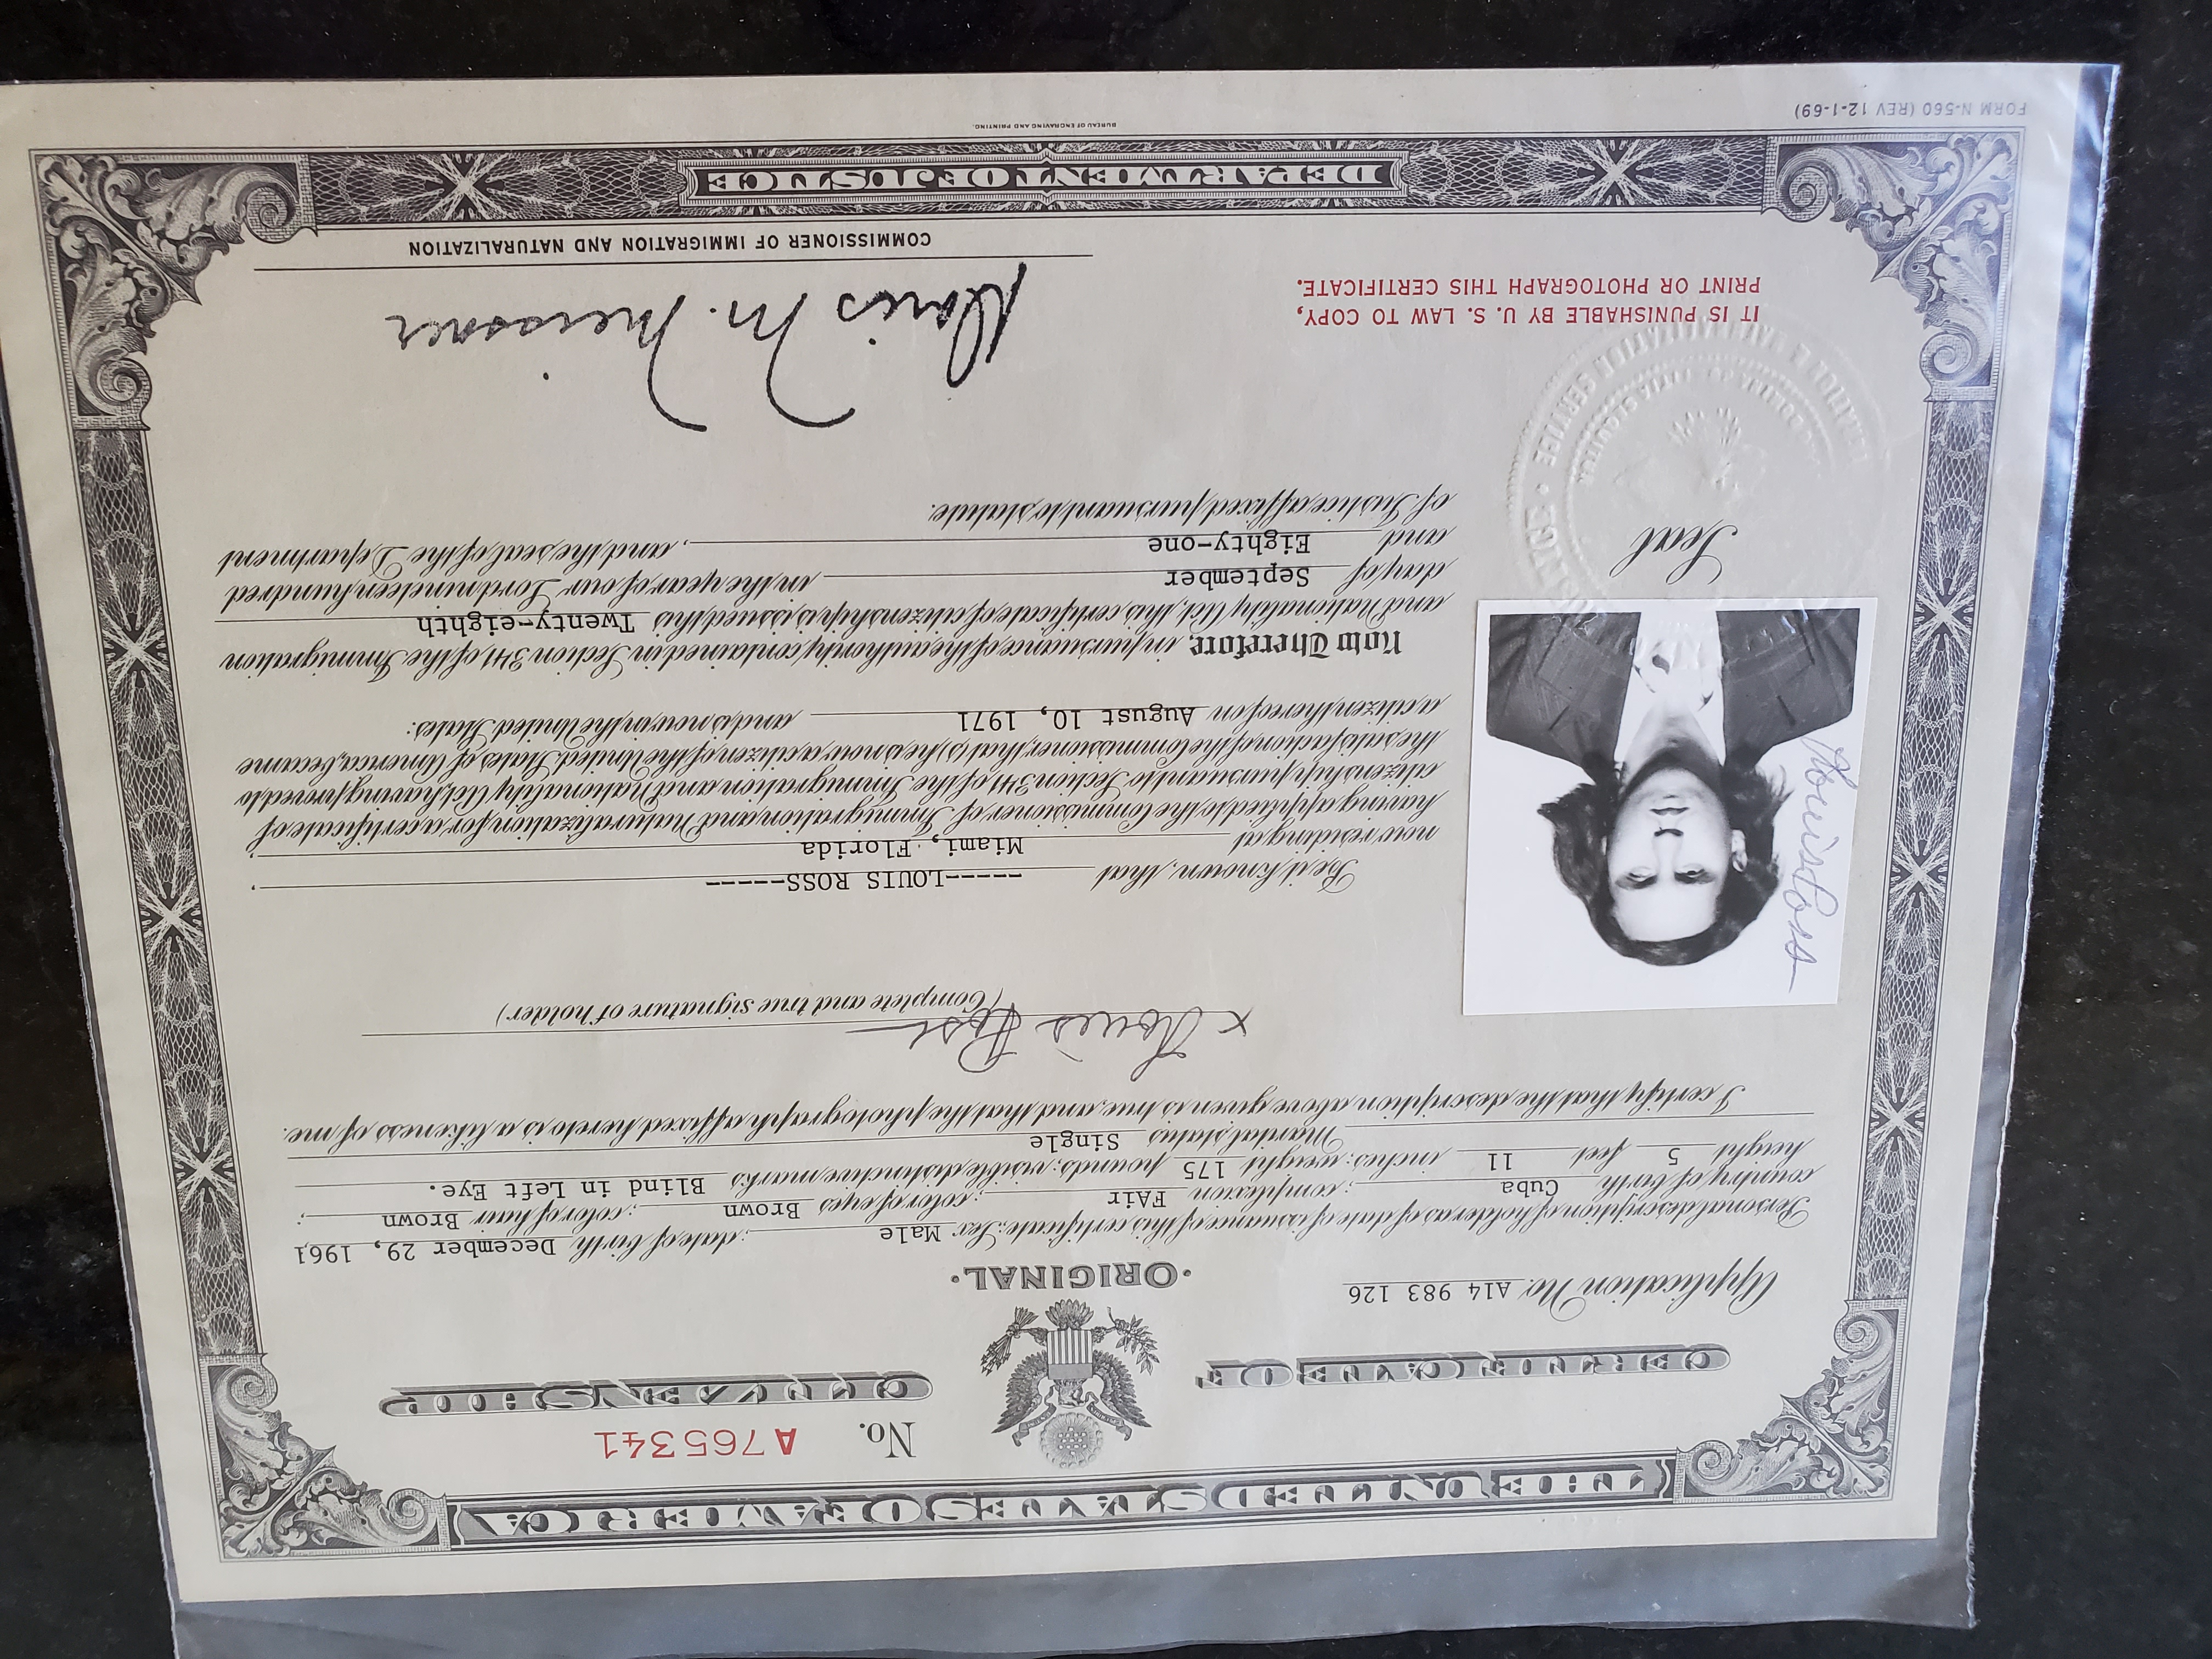 Lou citizenship certificate.